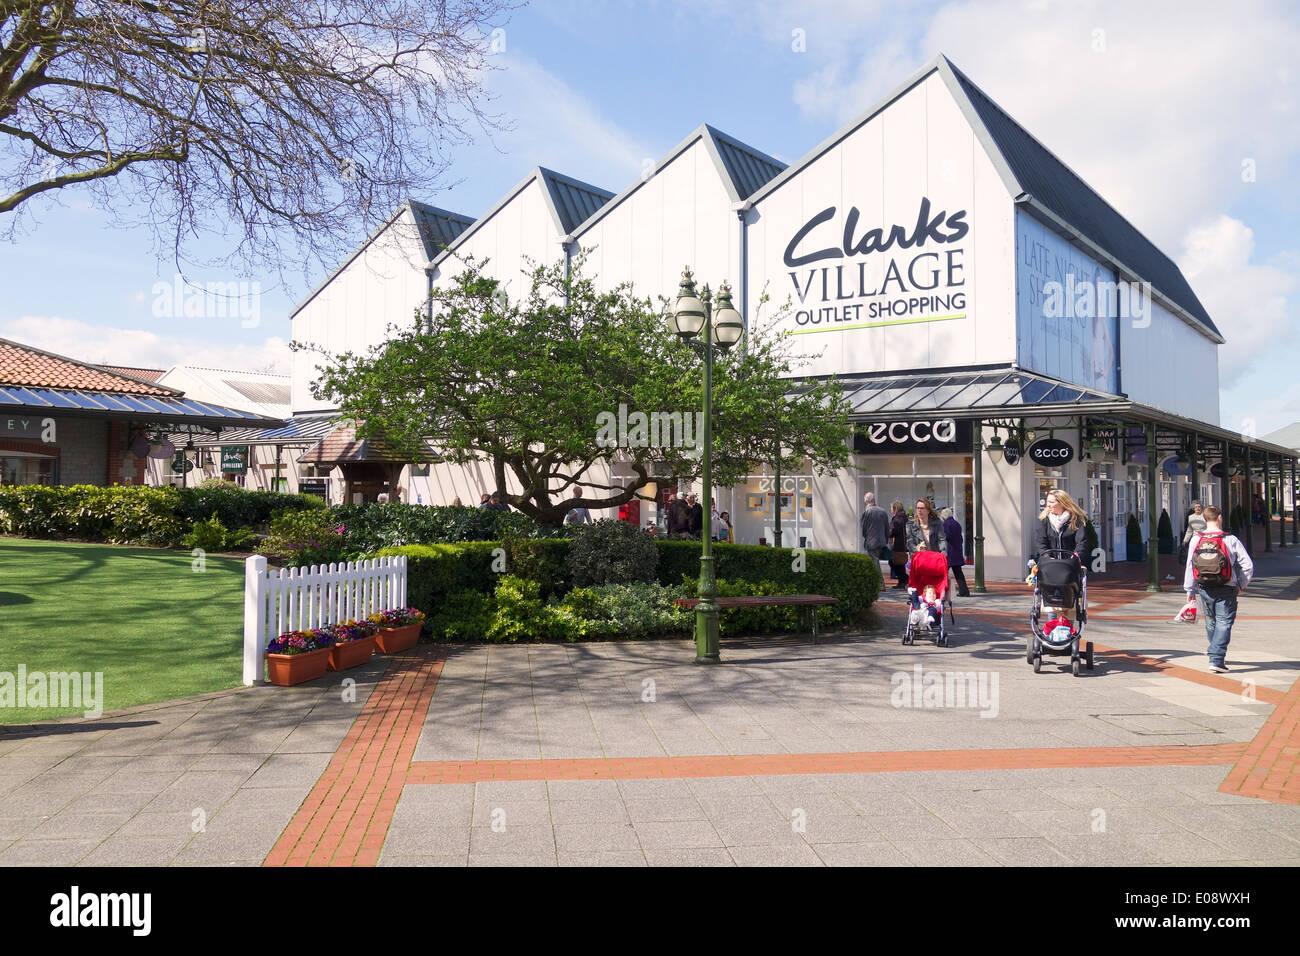 Clarks Village Outlet Shopping, Street, Somerset, England, UK Stock Photo -  Alamy